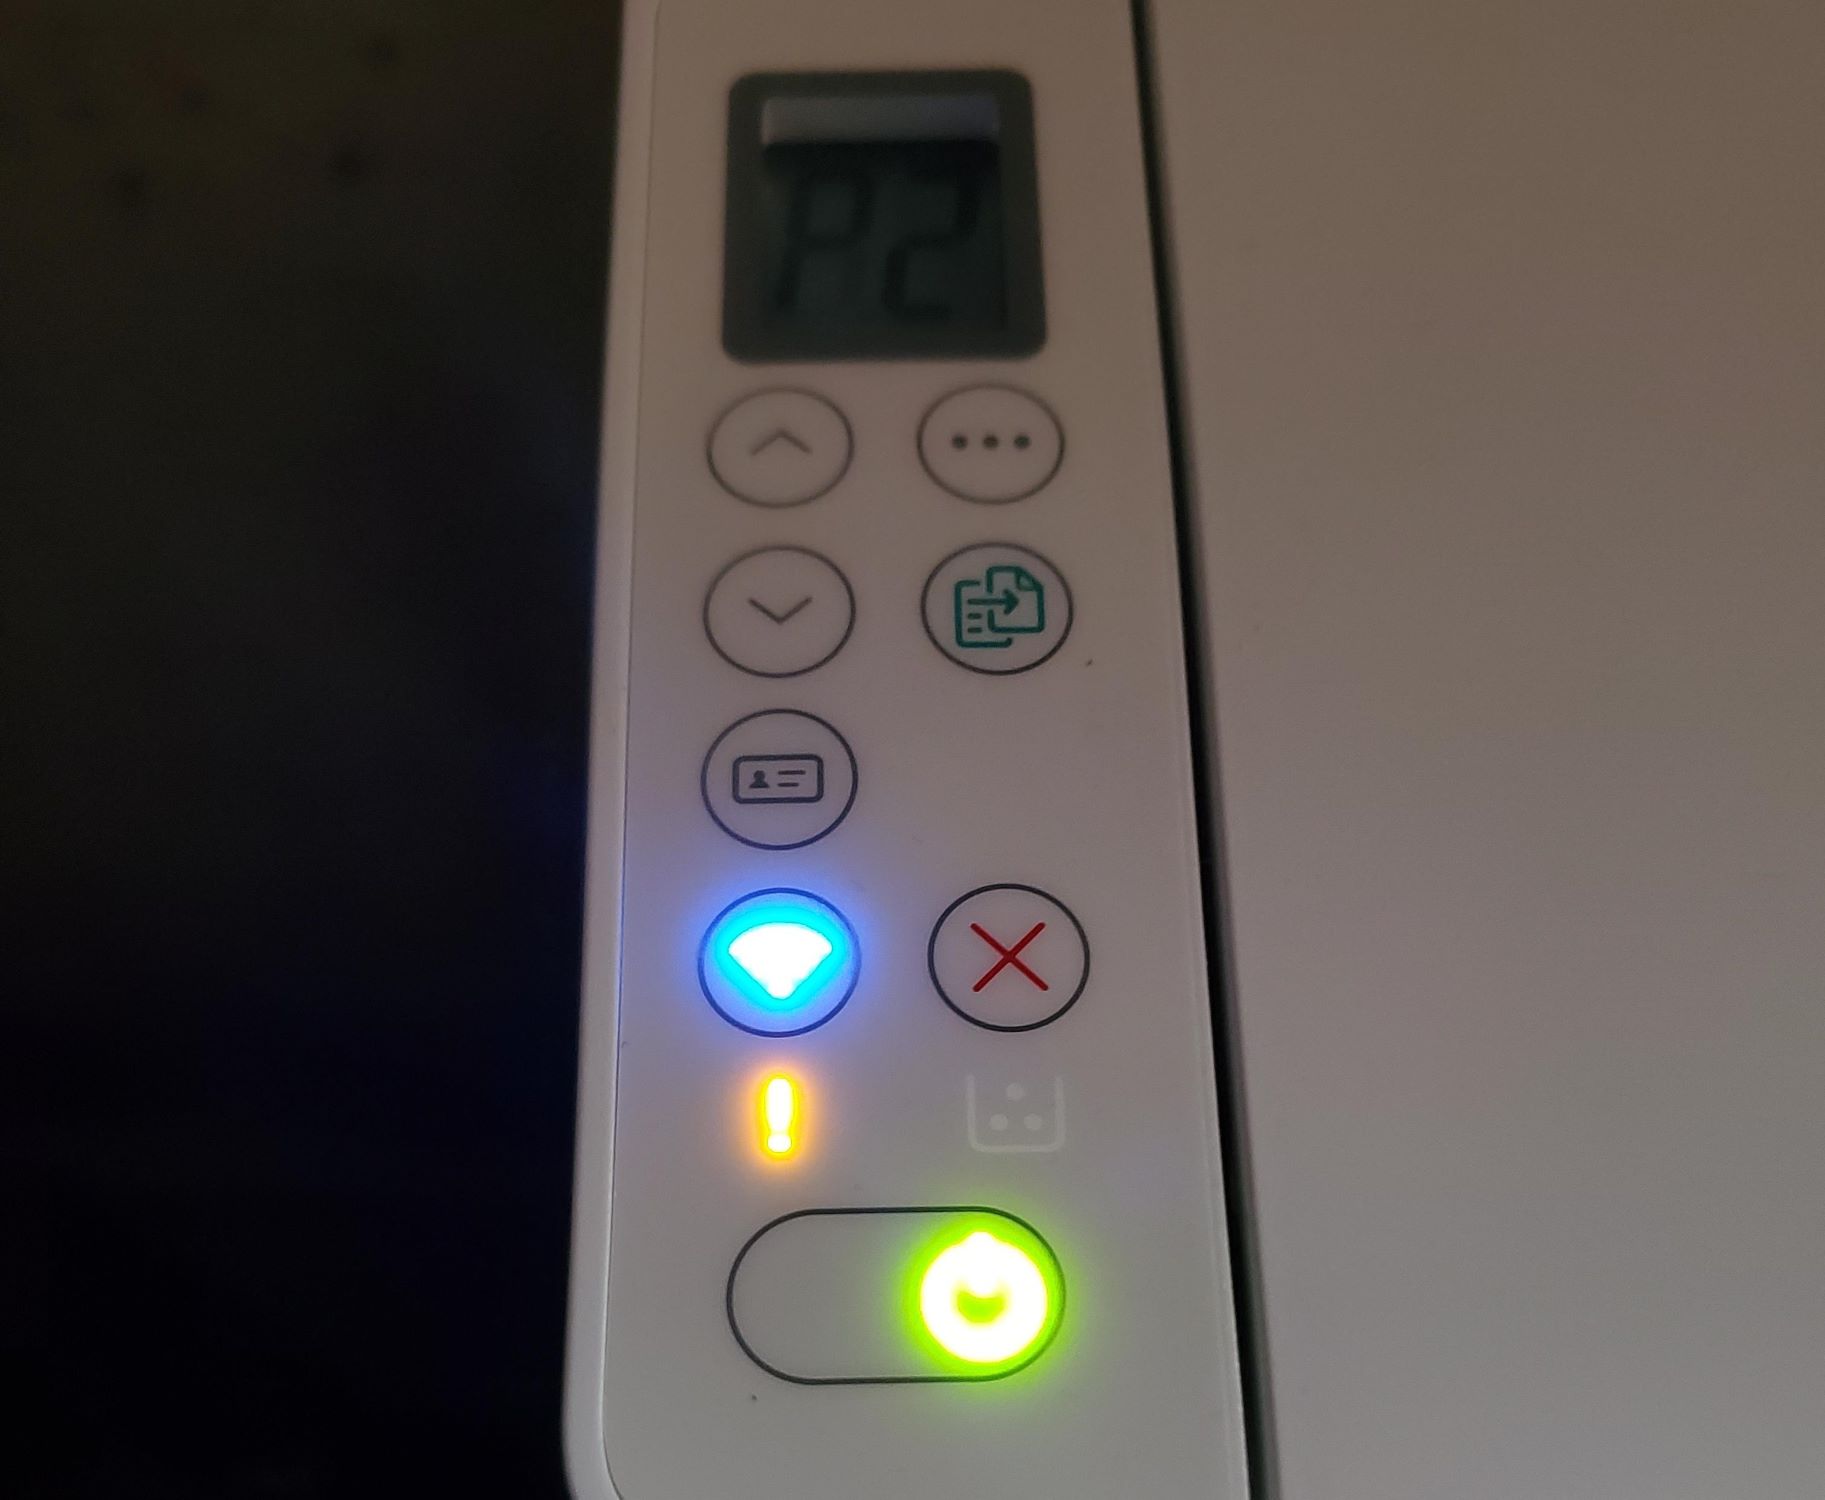 Why Is My HP Printer Flashing